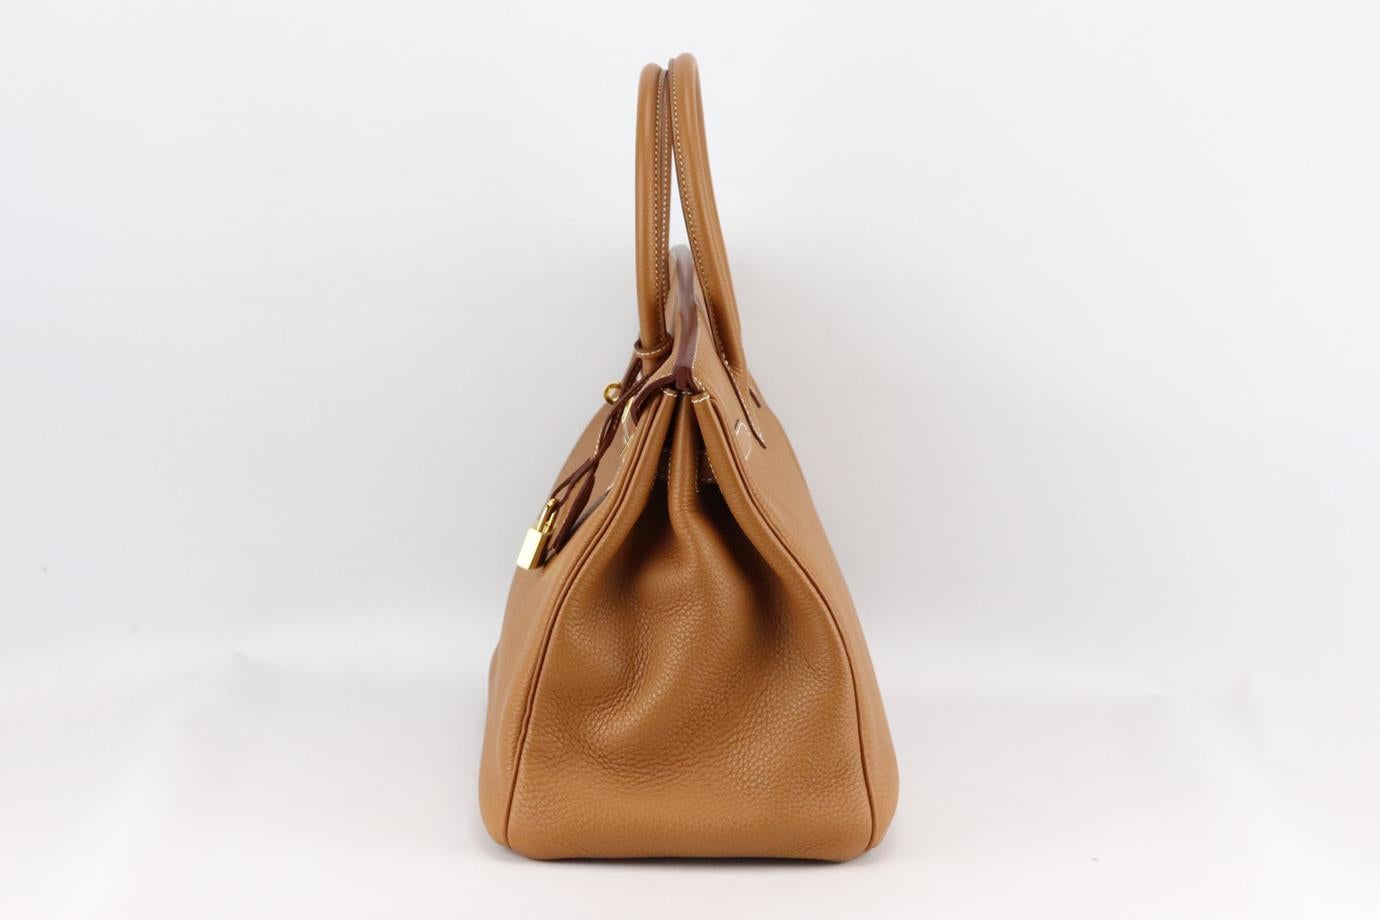 Women's Hermès 2011 Birkin 35cm Togo Leather Bag For Sale